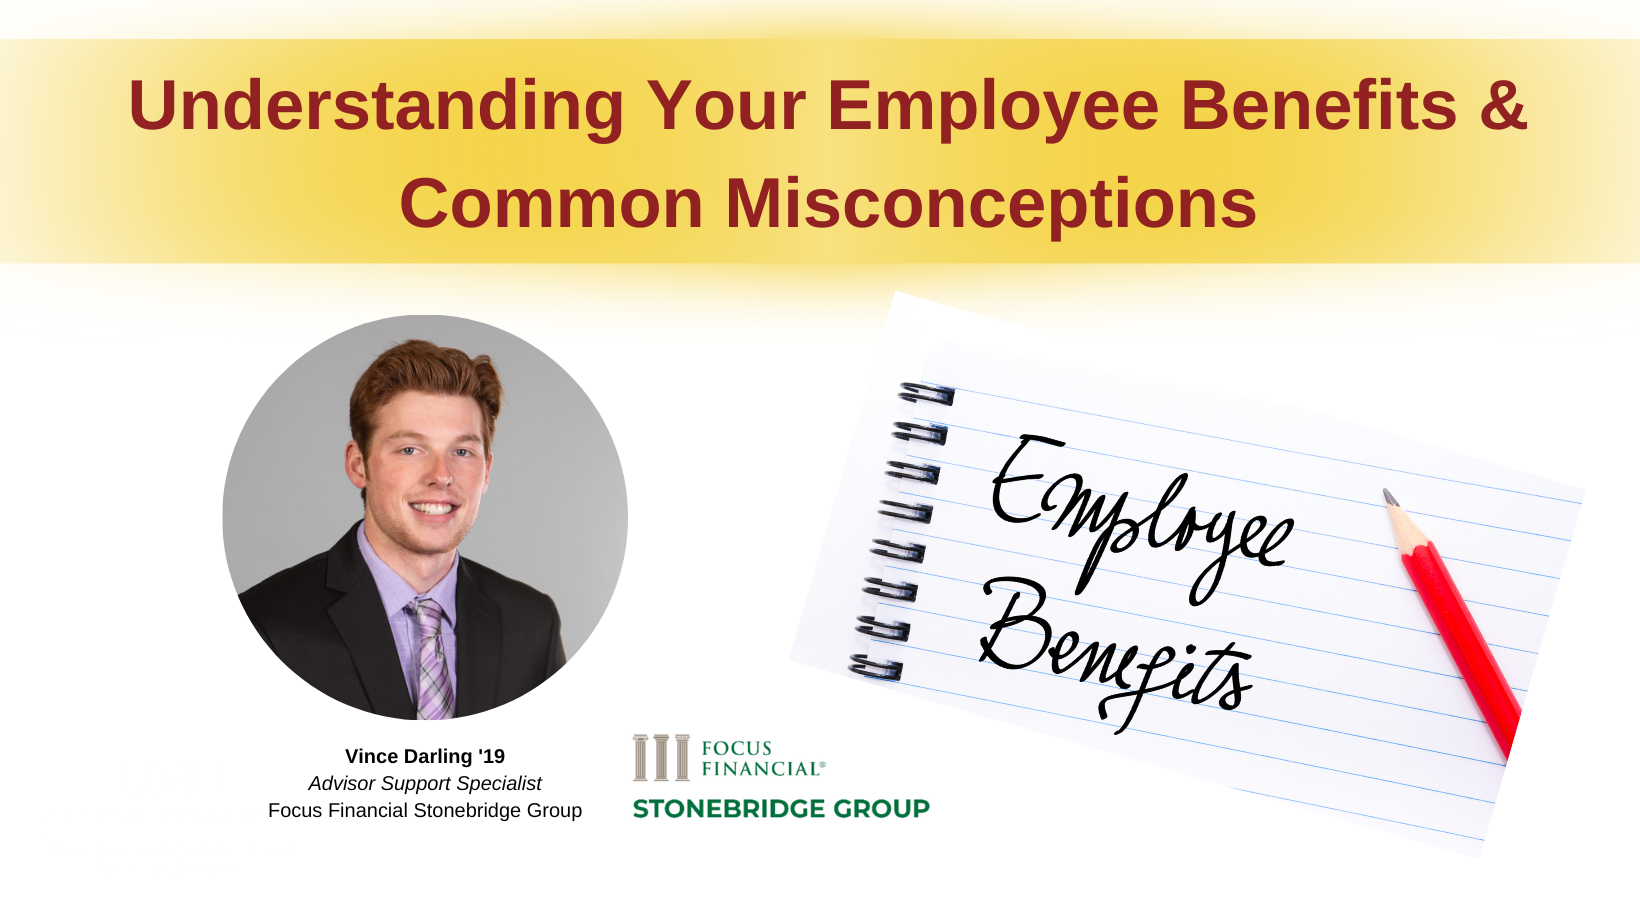 understanding your employee benefits and common misconceptions - career workshop